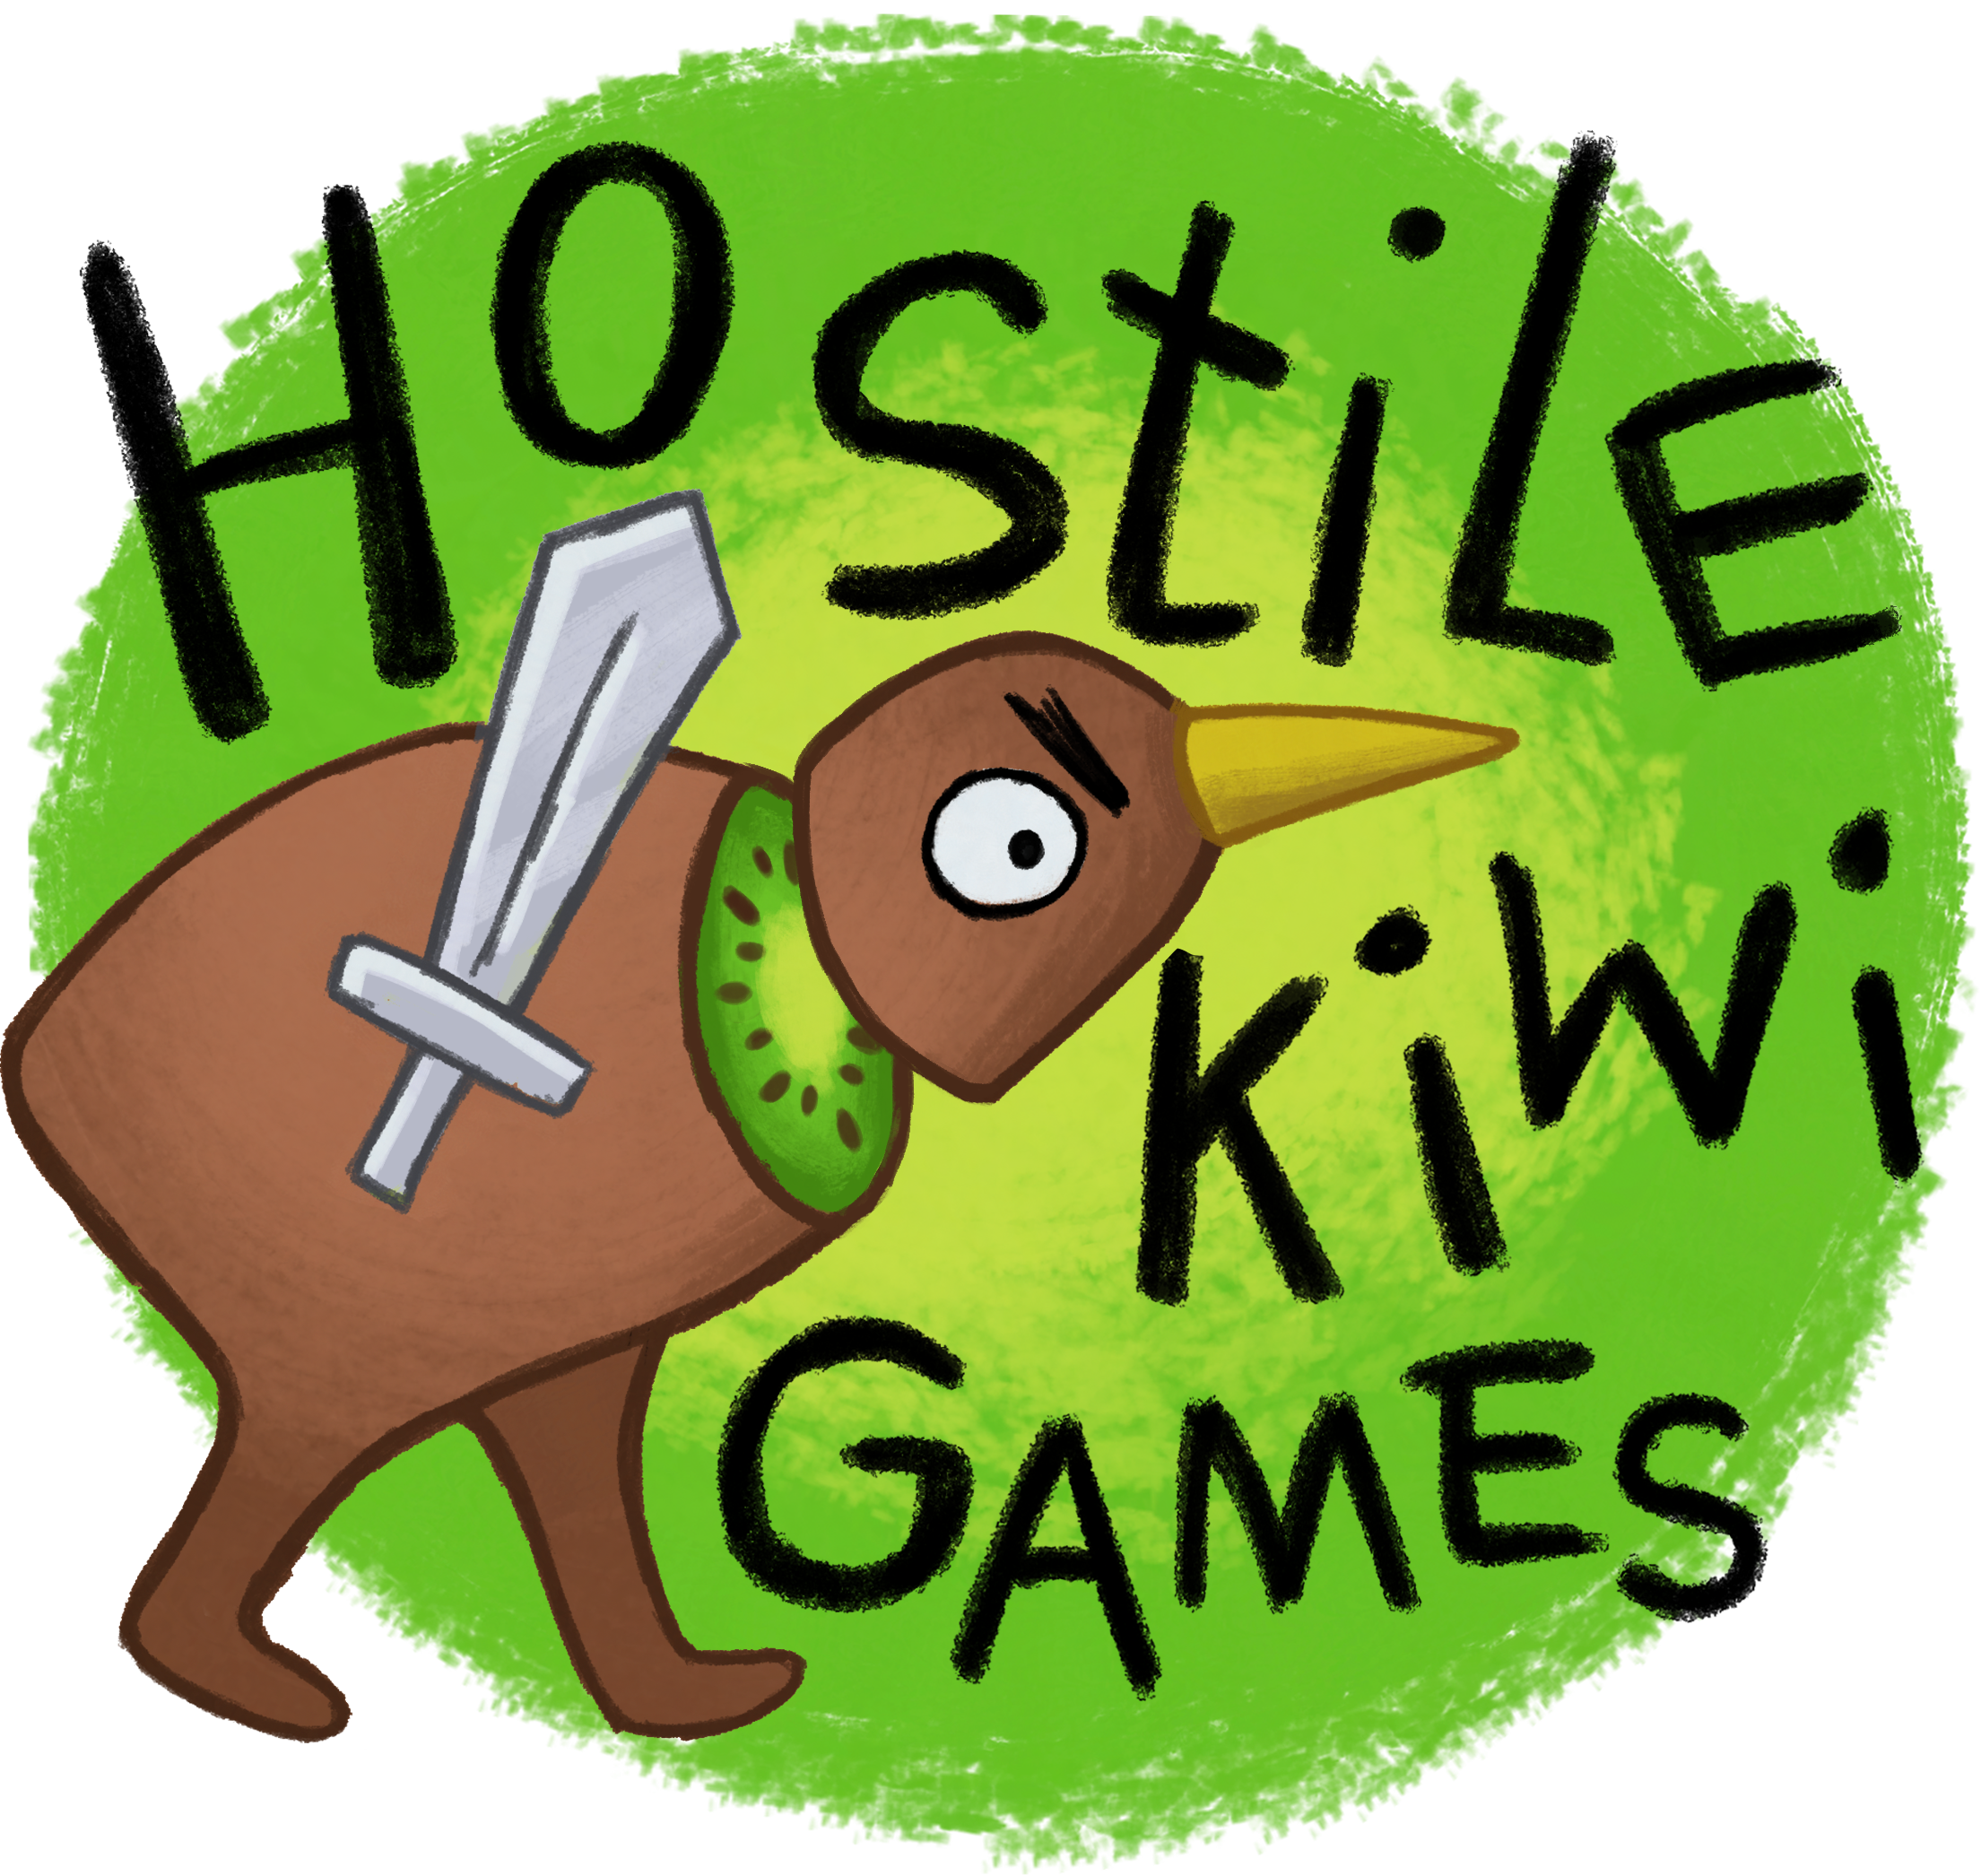 Hostile Kiwi Games studio logo